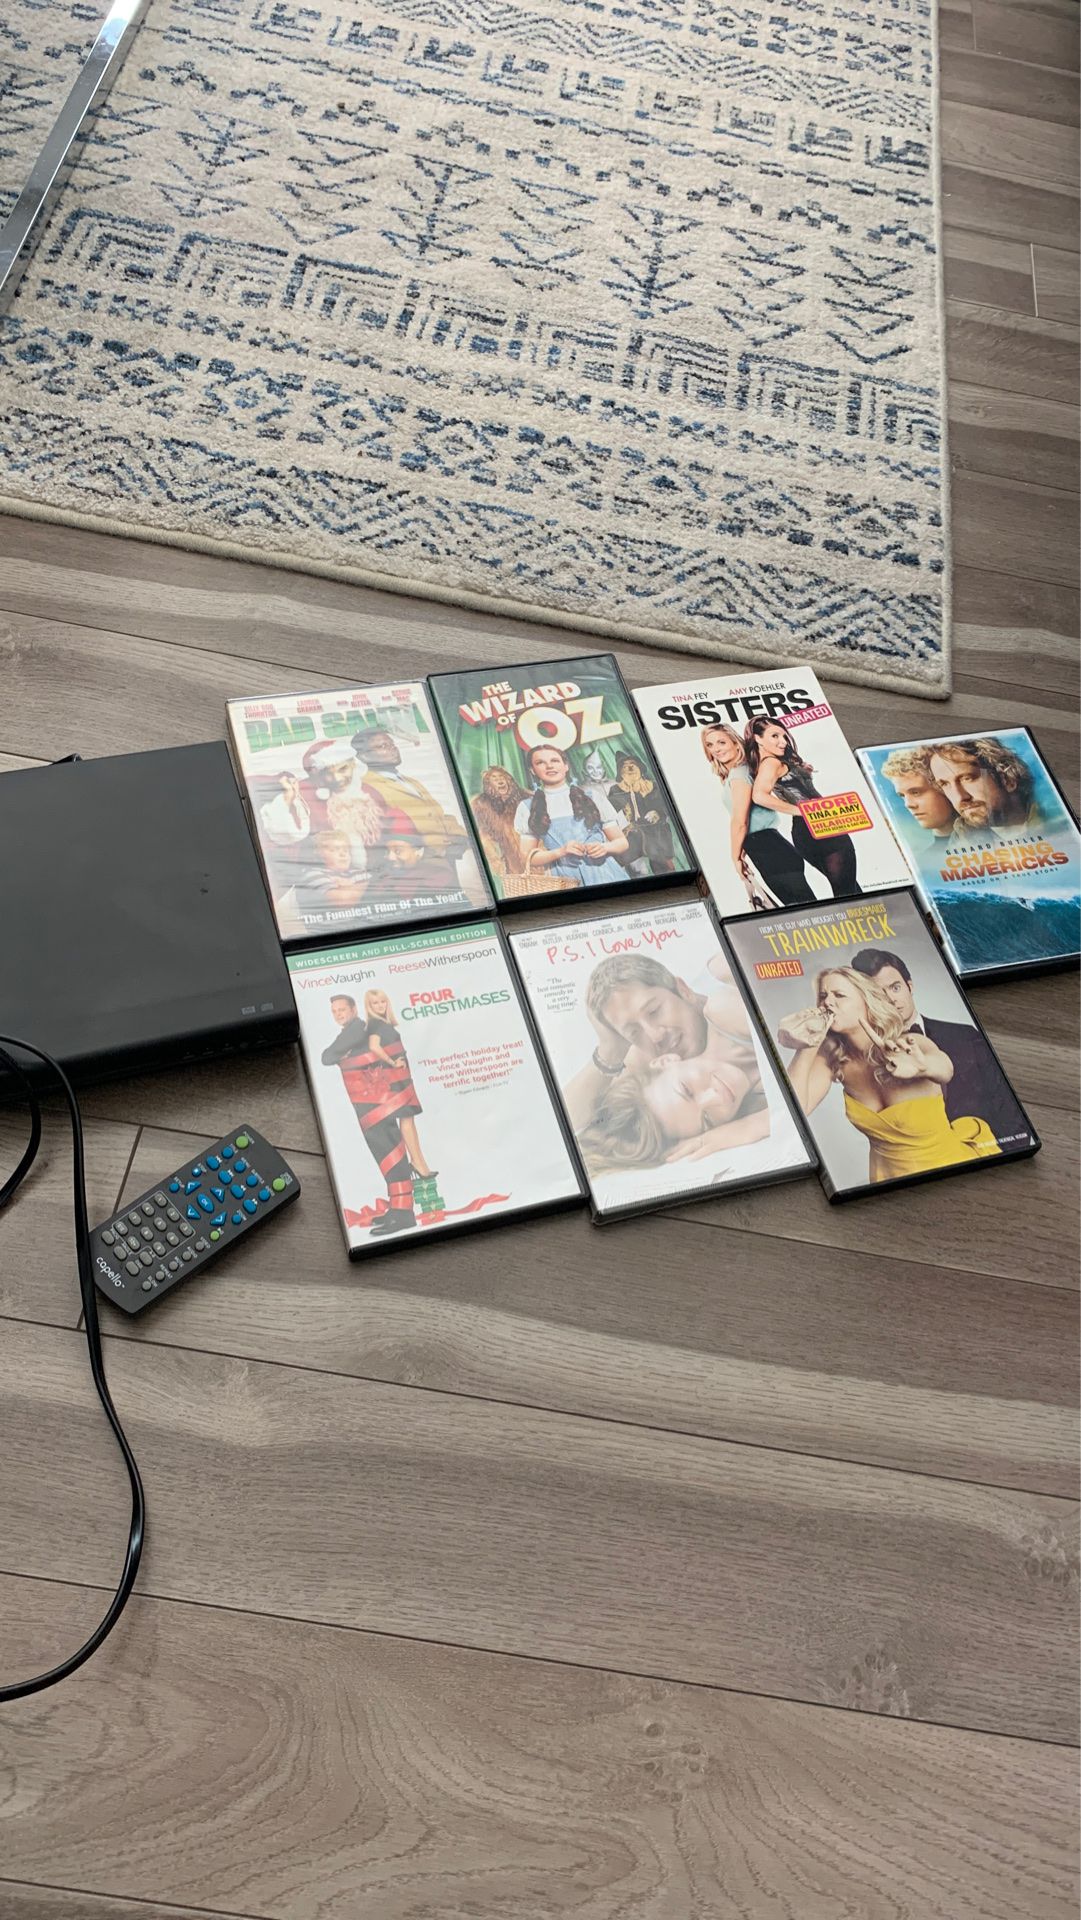 DVD Player + 7 movies